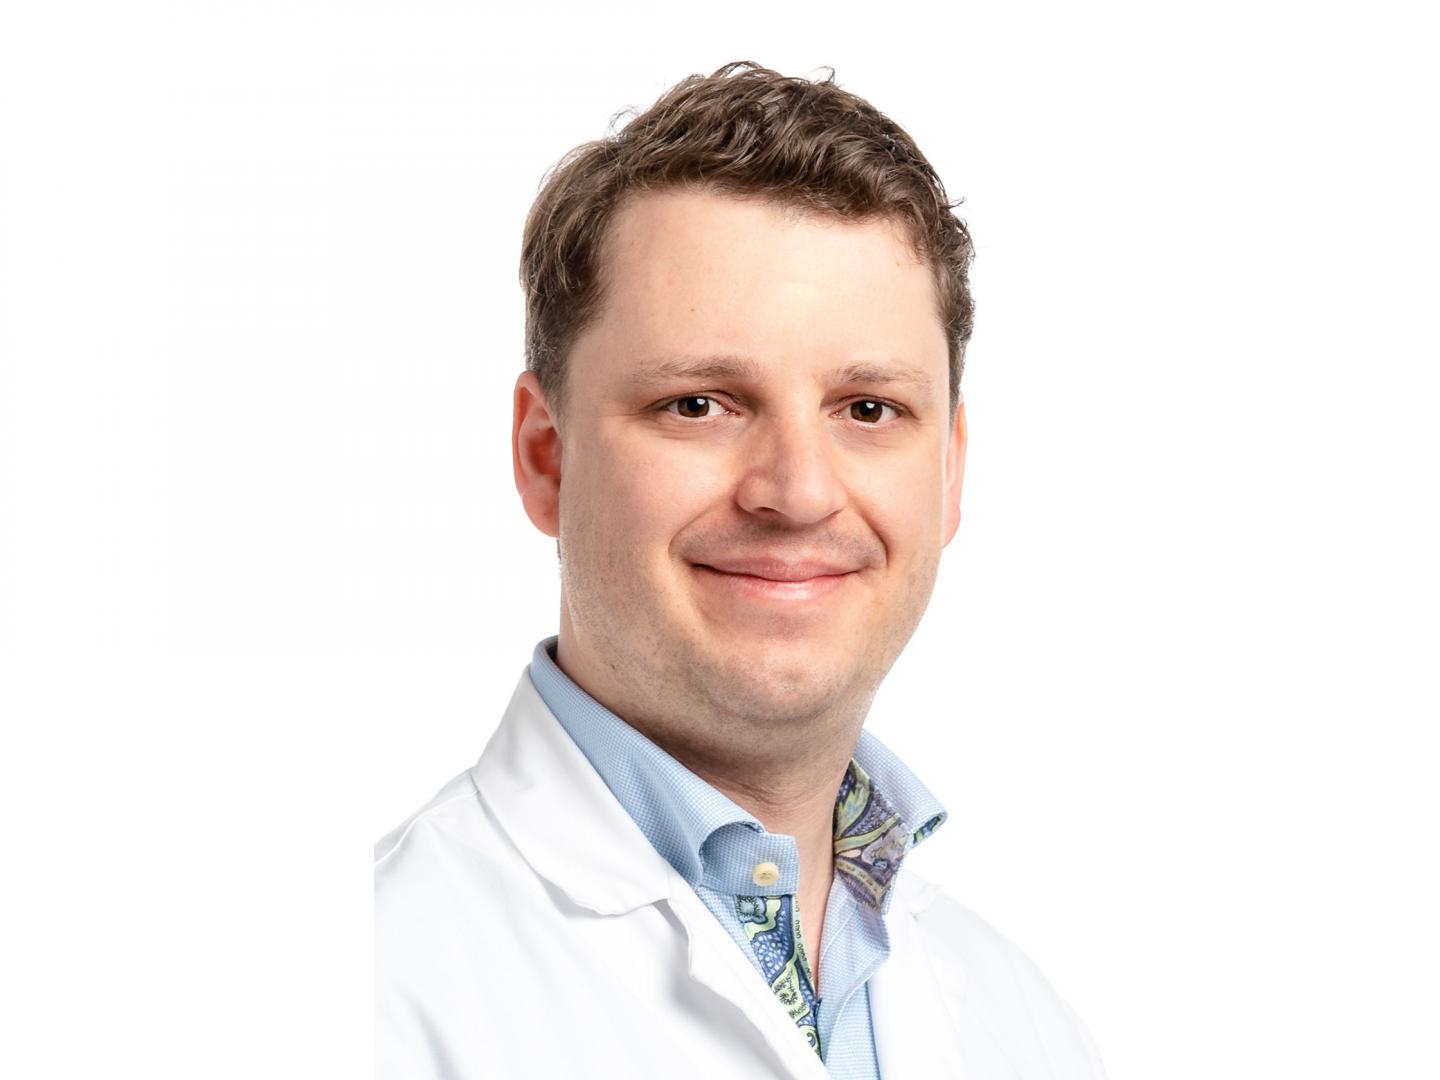 PD David Julian Seiffge MD, Senior Attending in Department of Neurology, Inselspital, University Hospital Bern